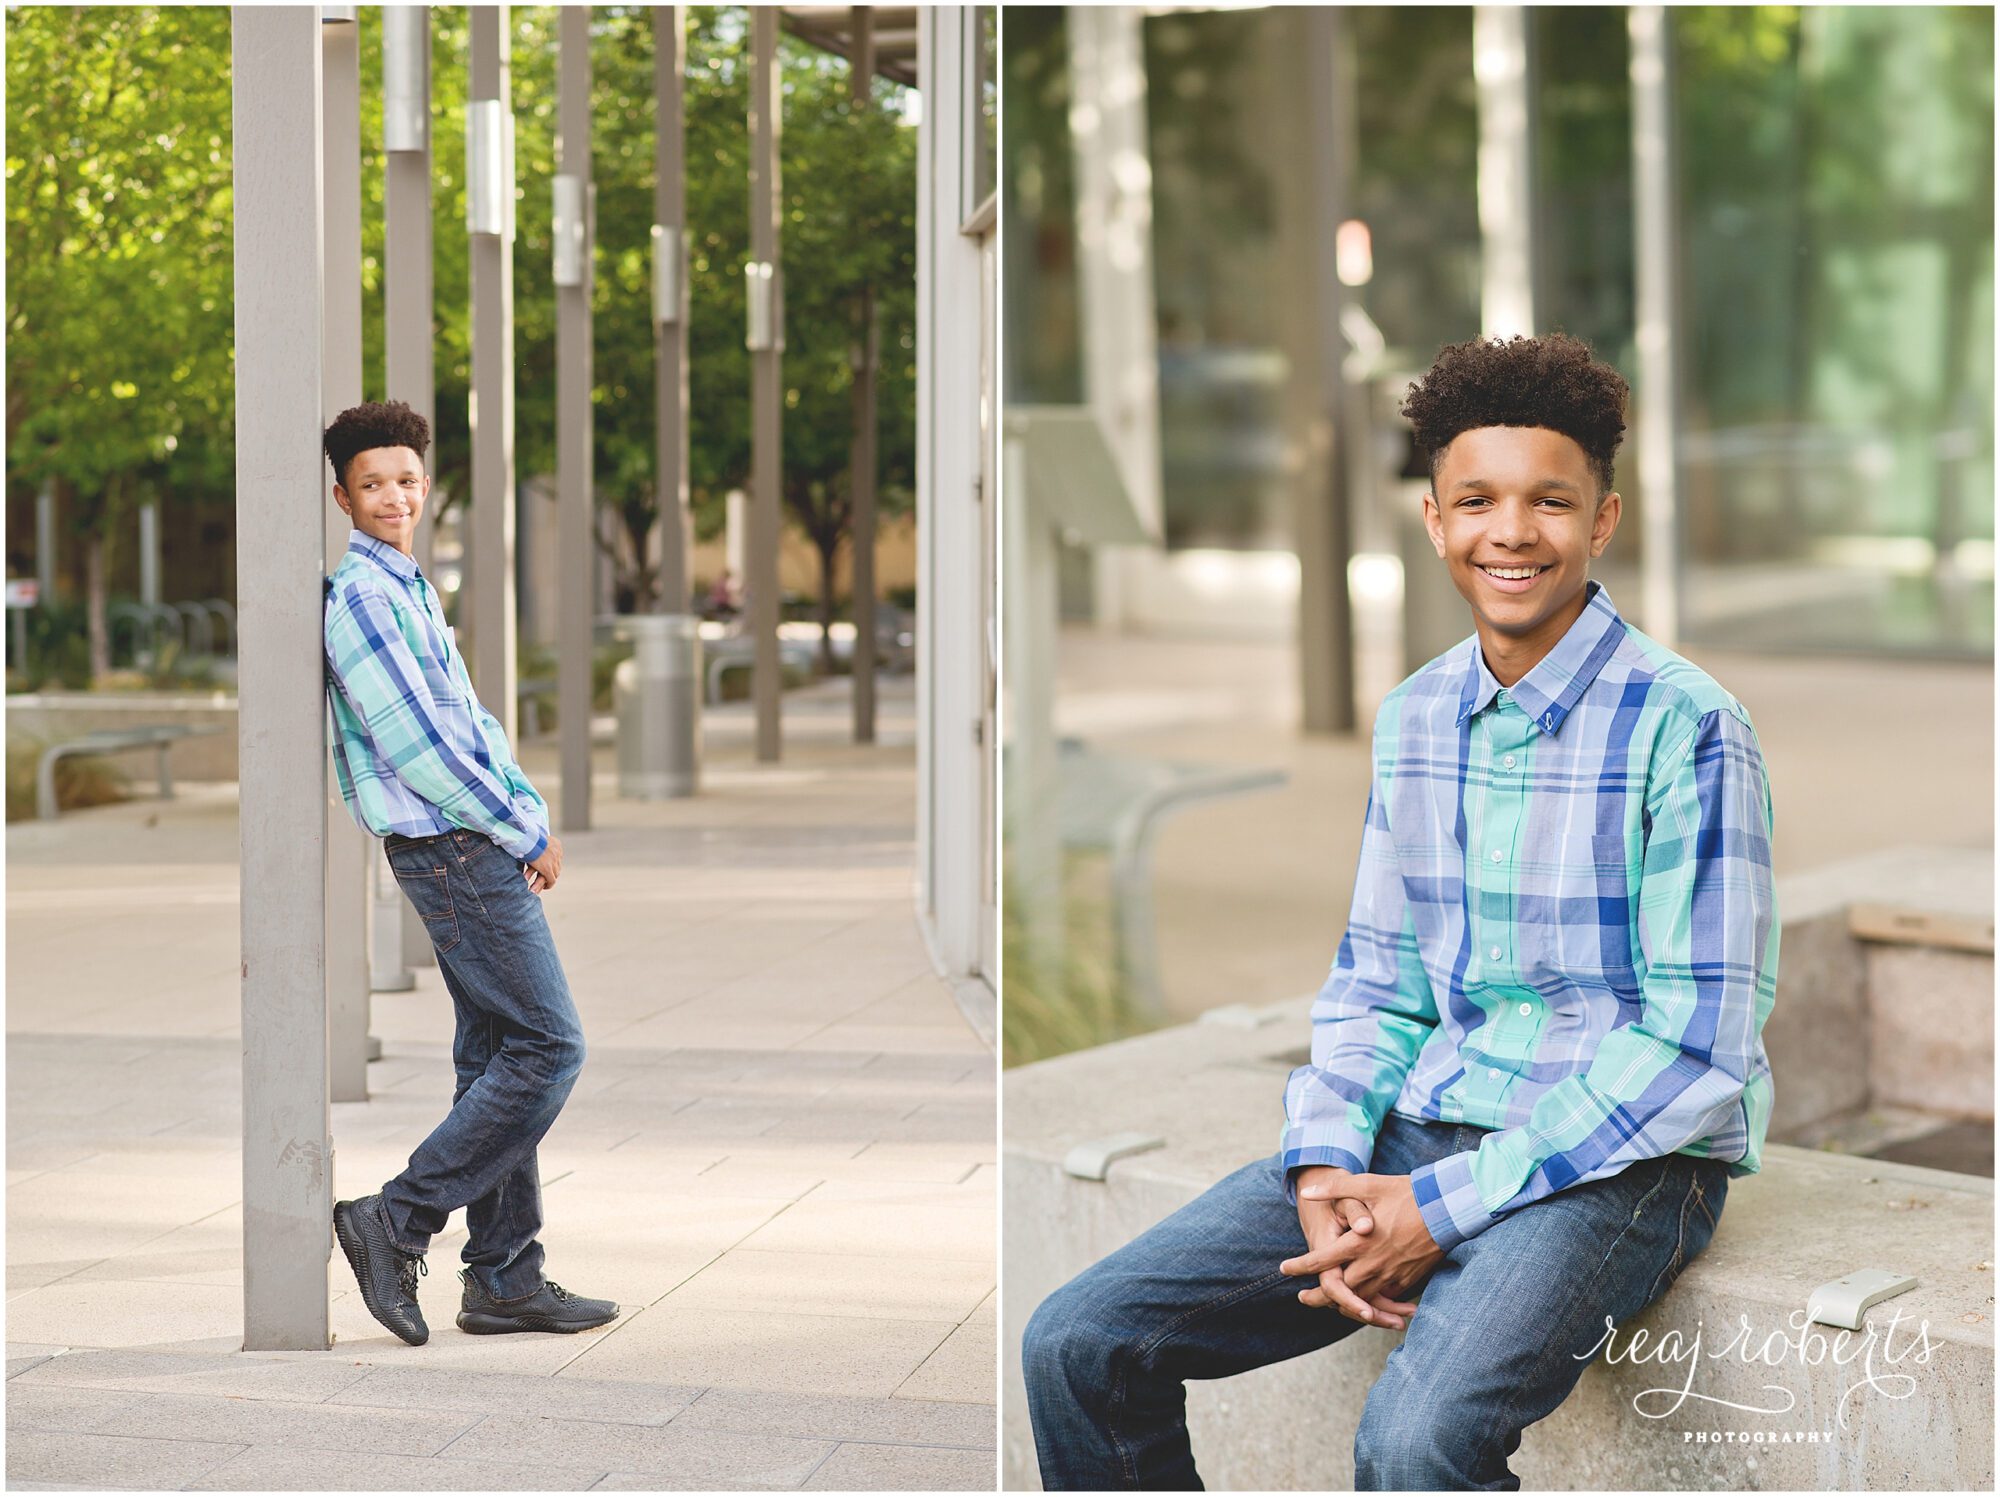 Casual high school senior photos for guys | Chandler, AZ | Reaj Roberts Photography